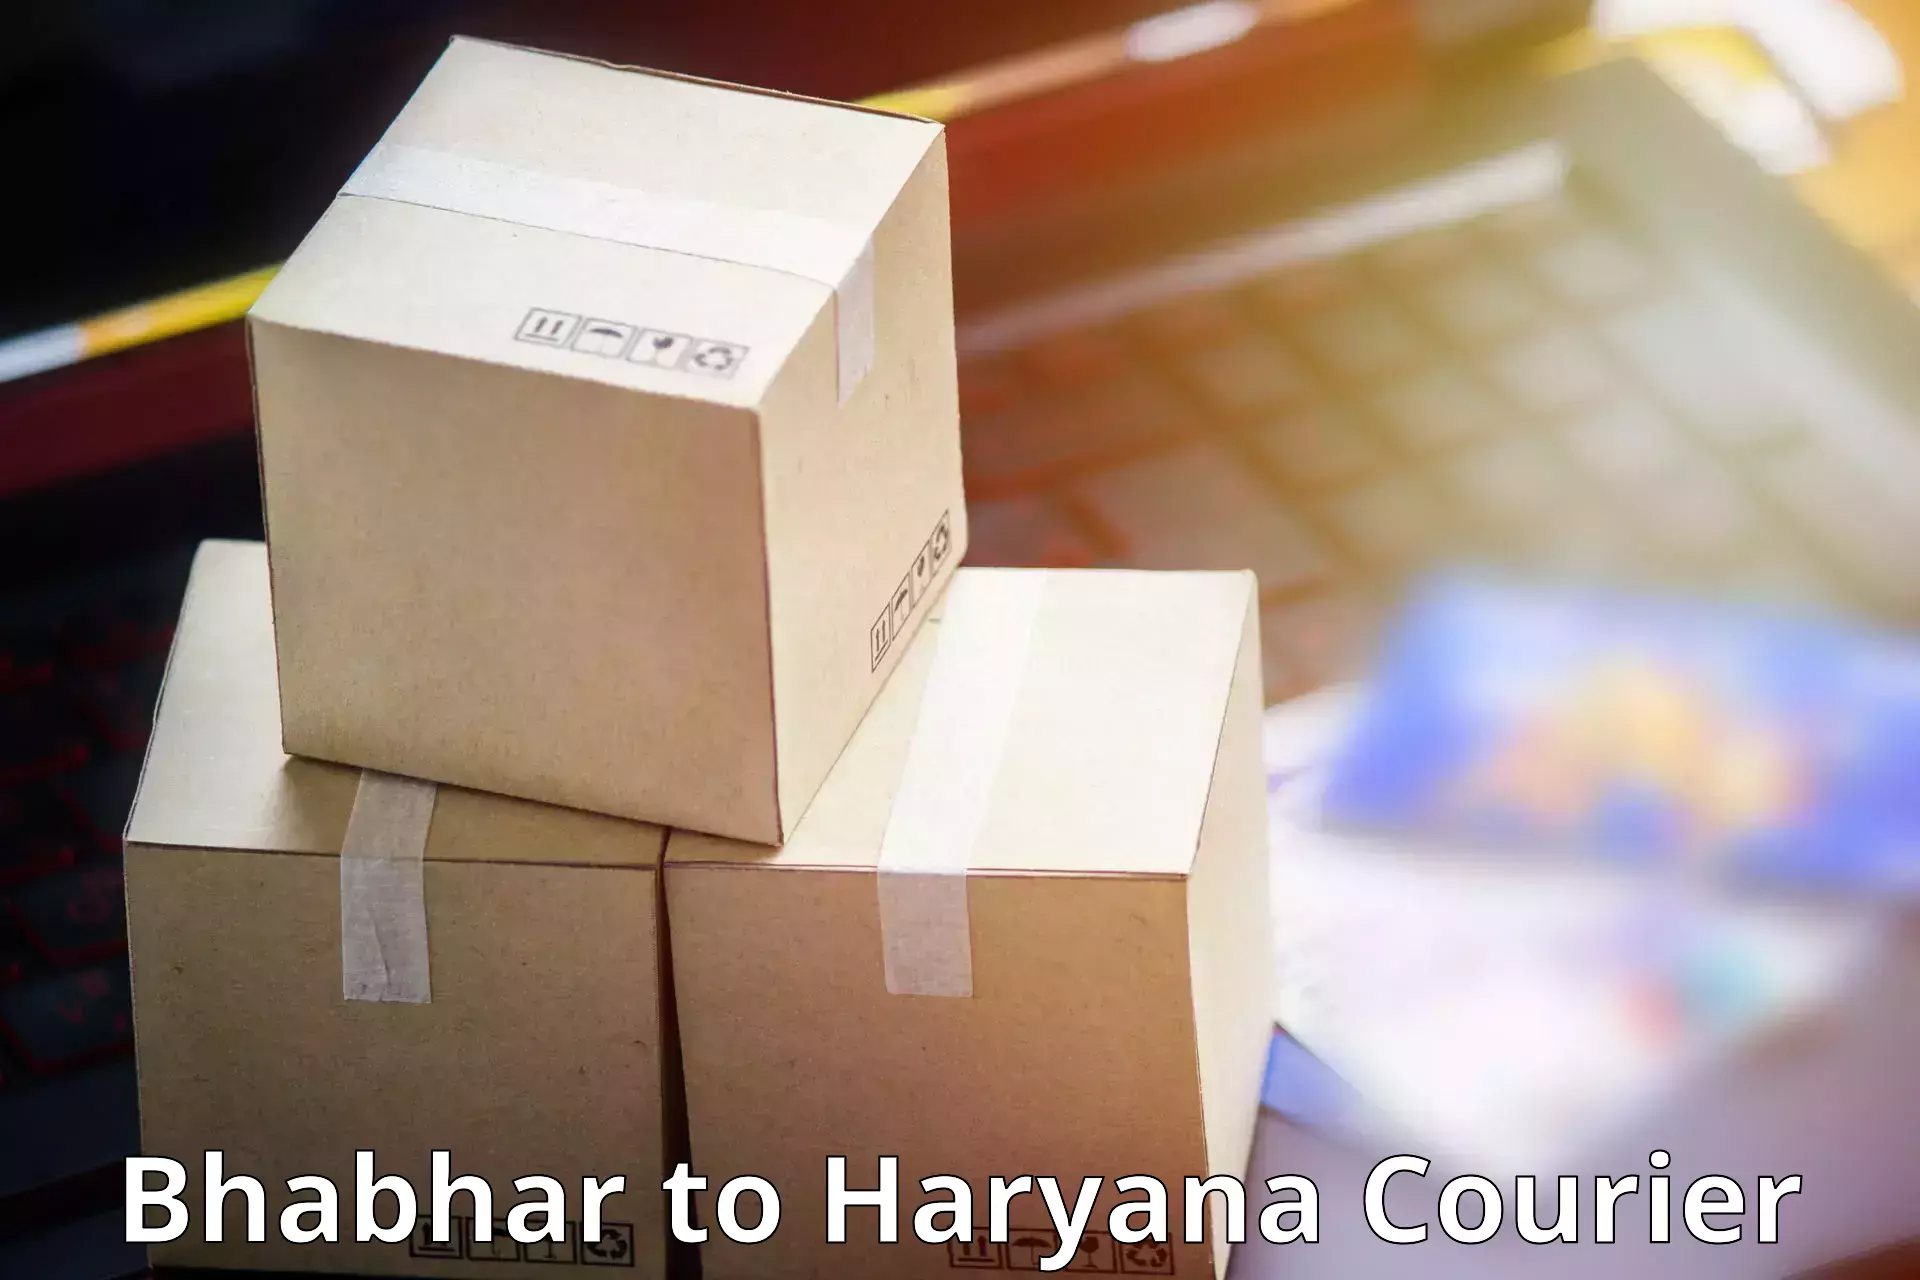 Courier service comparison Bhabhar to Haryana